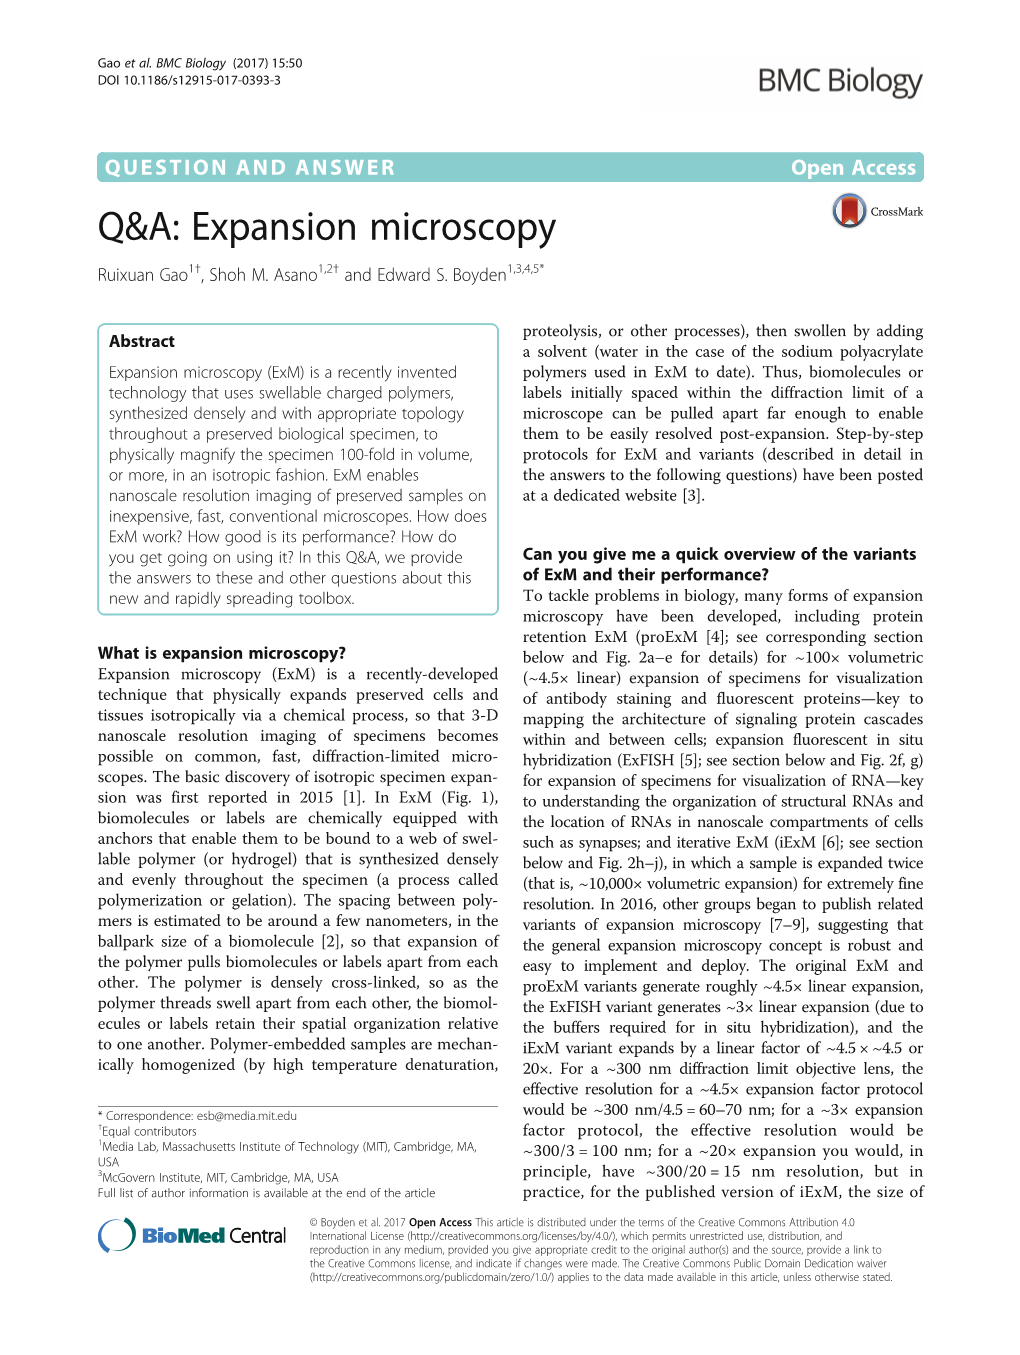 Q&A: Expansion Microscopy